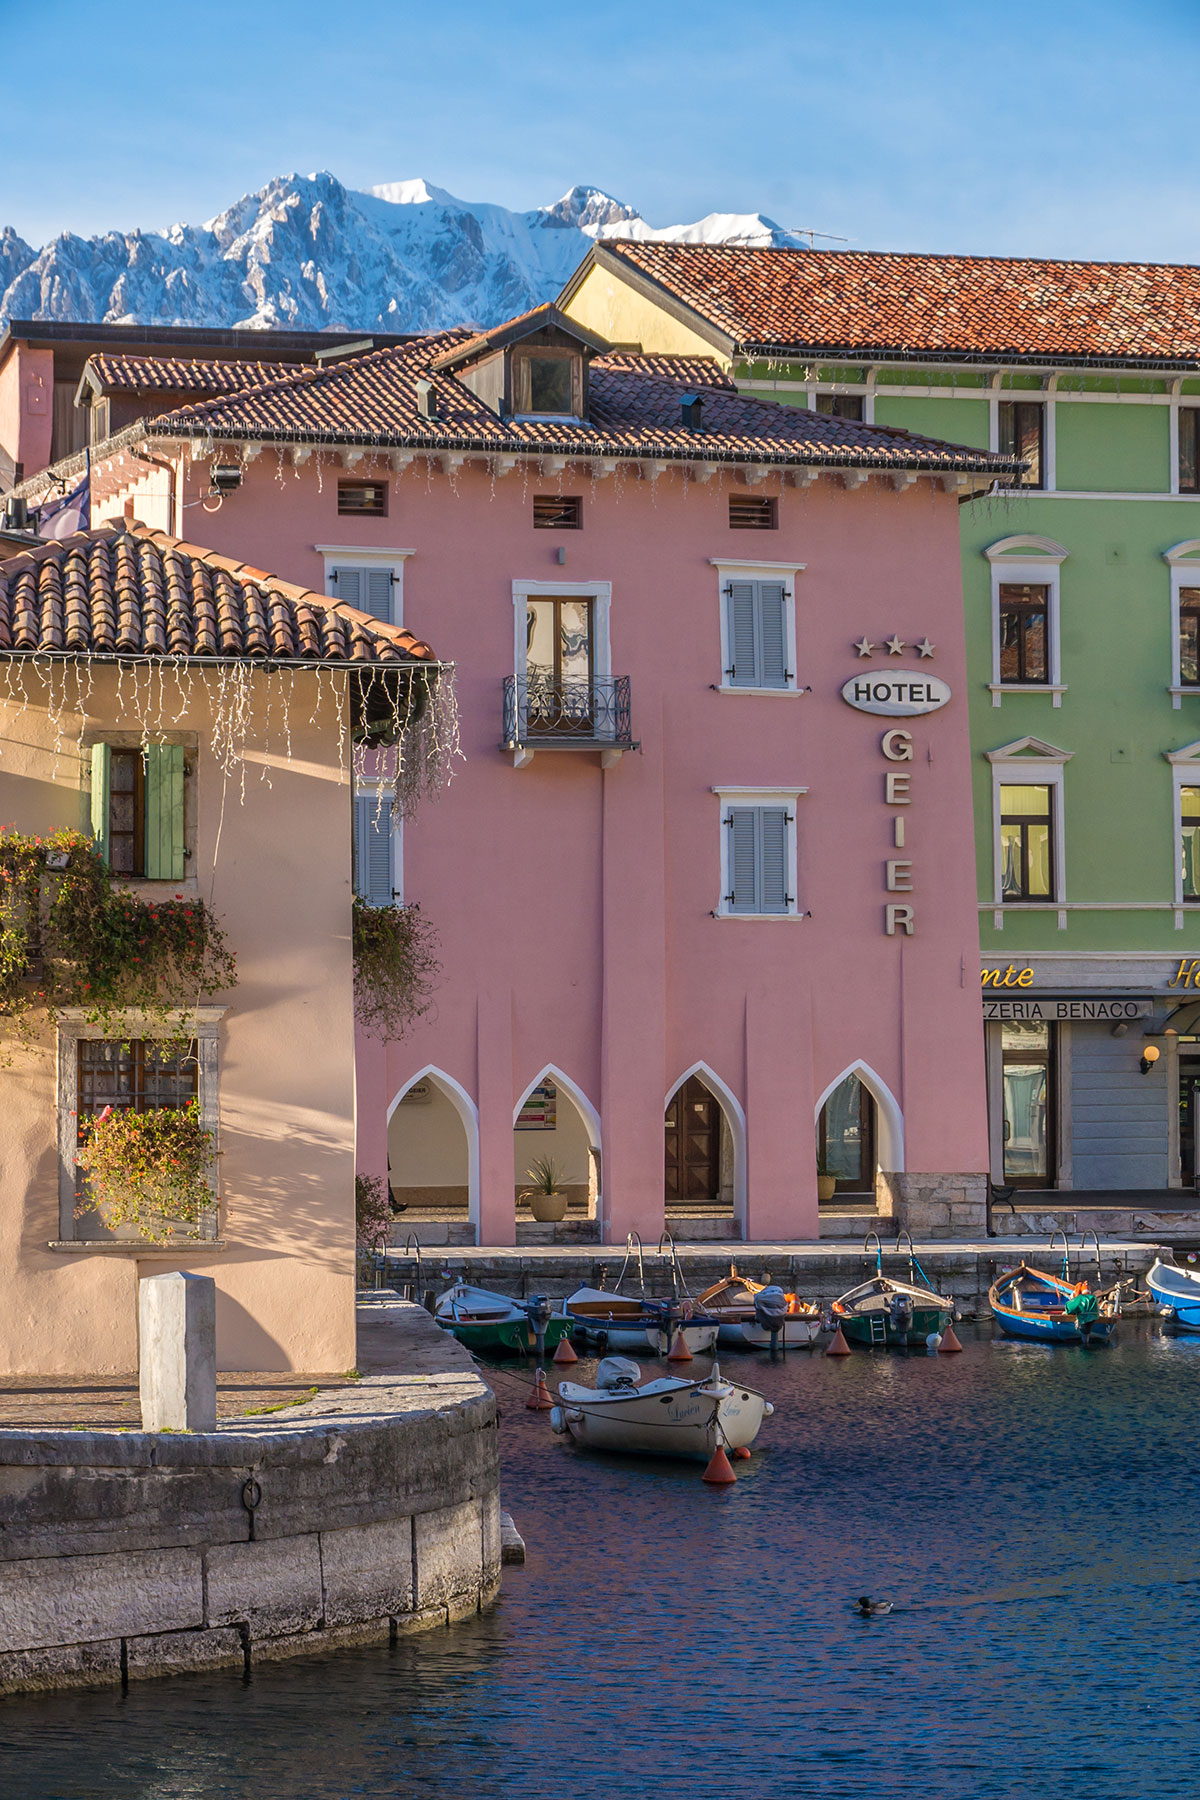 Port of Torbole, Lake Garda